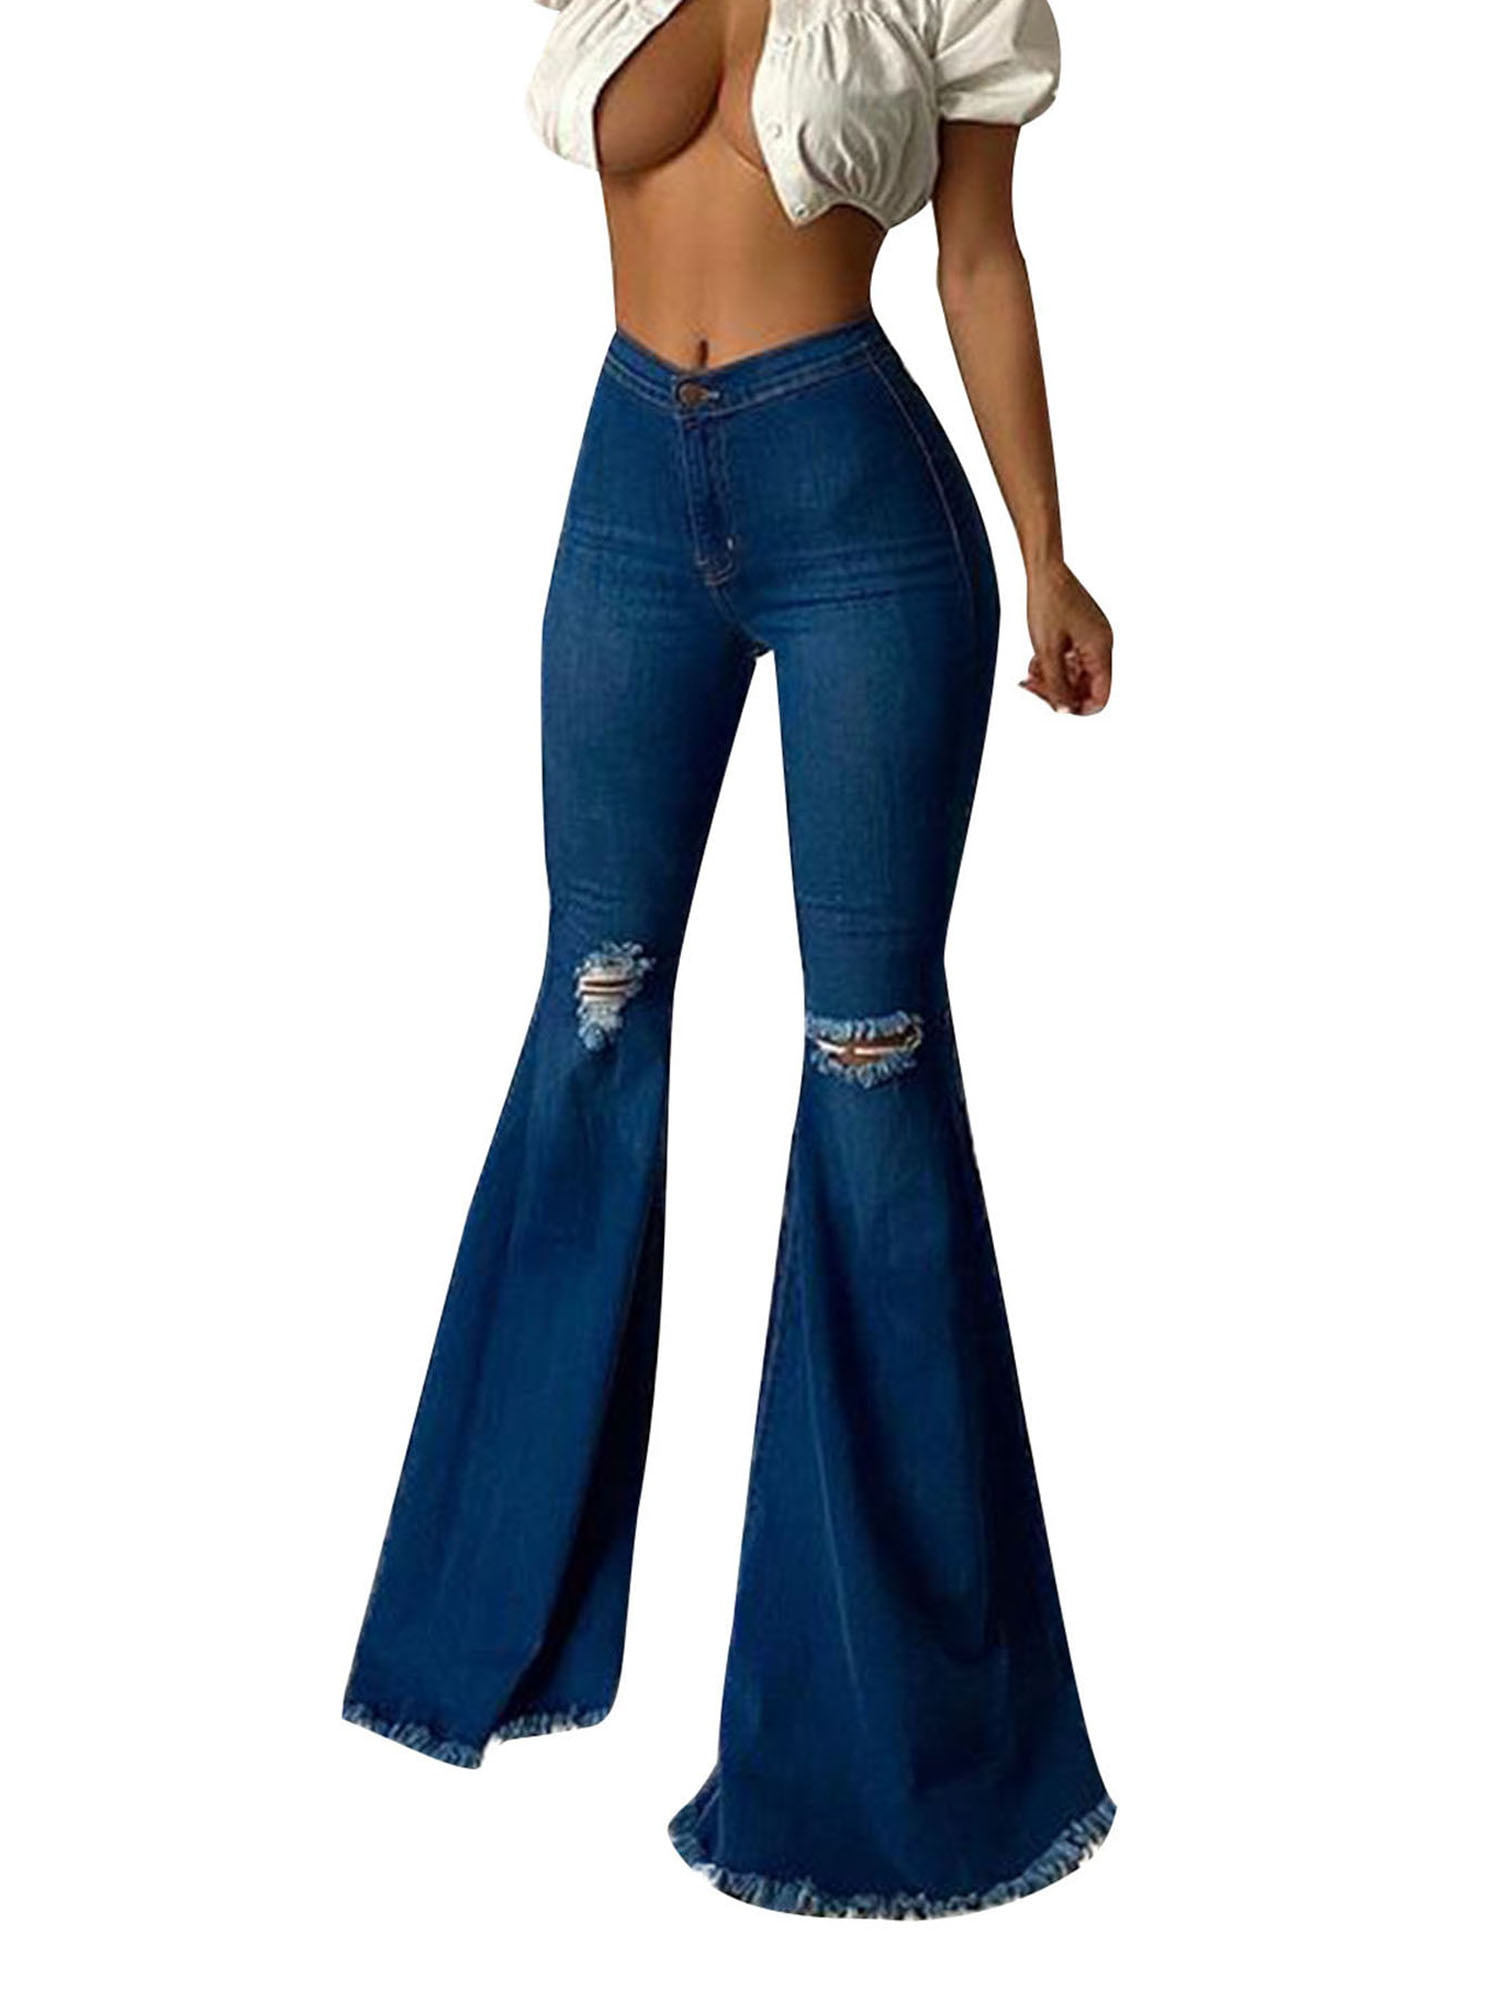 Women casual denim bodycon jeans suspender trousers skinny pants